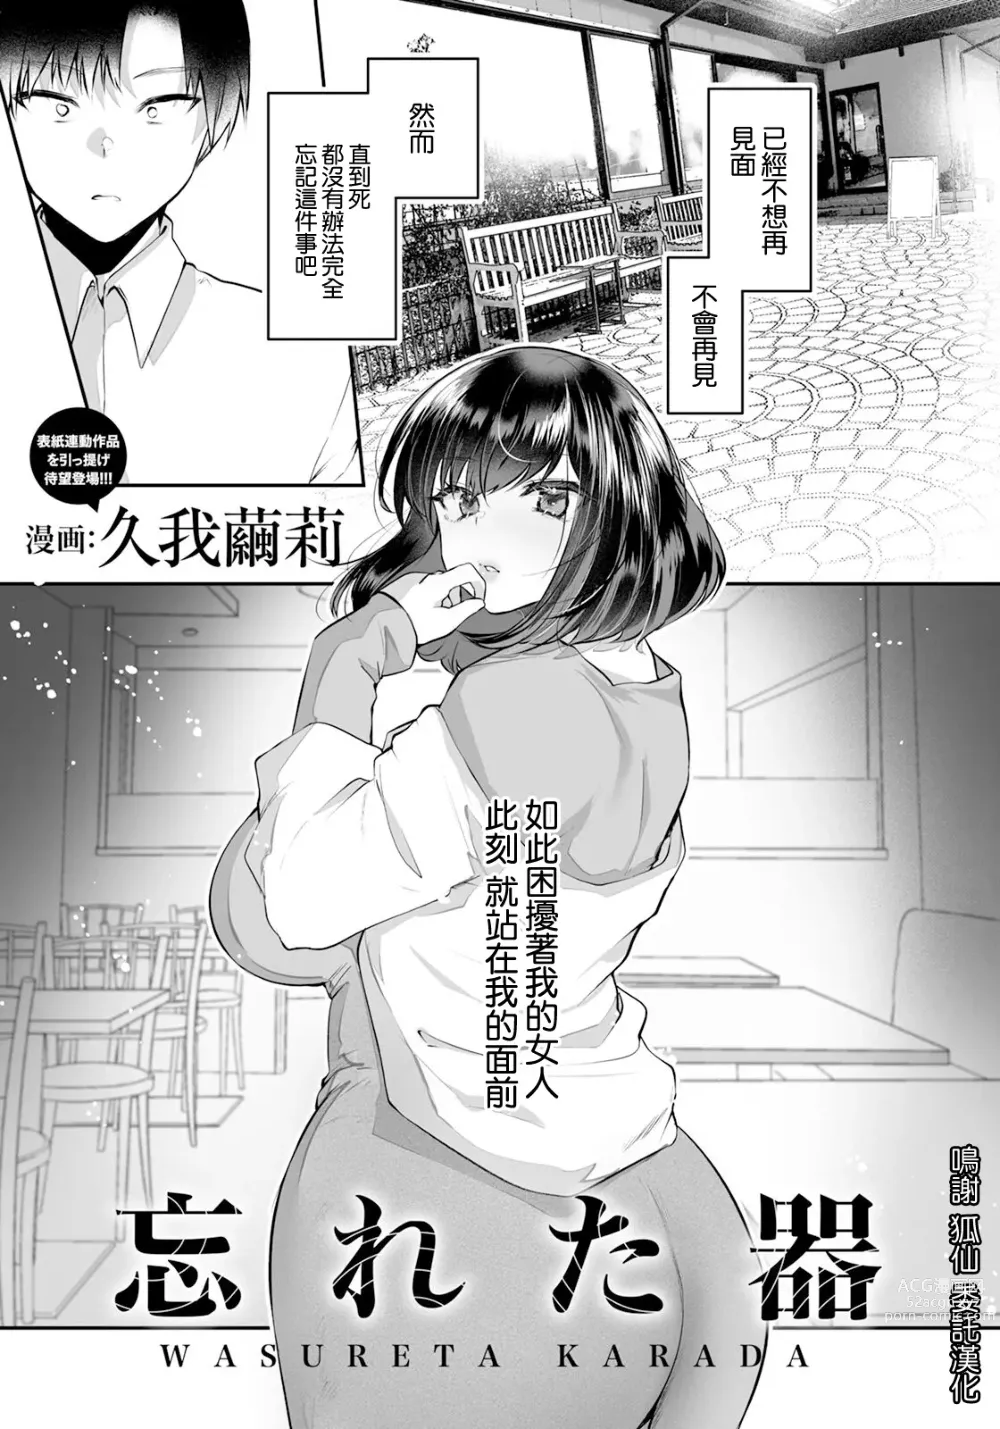 Page 1 of manga Wasureta Karada